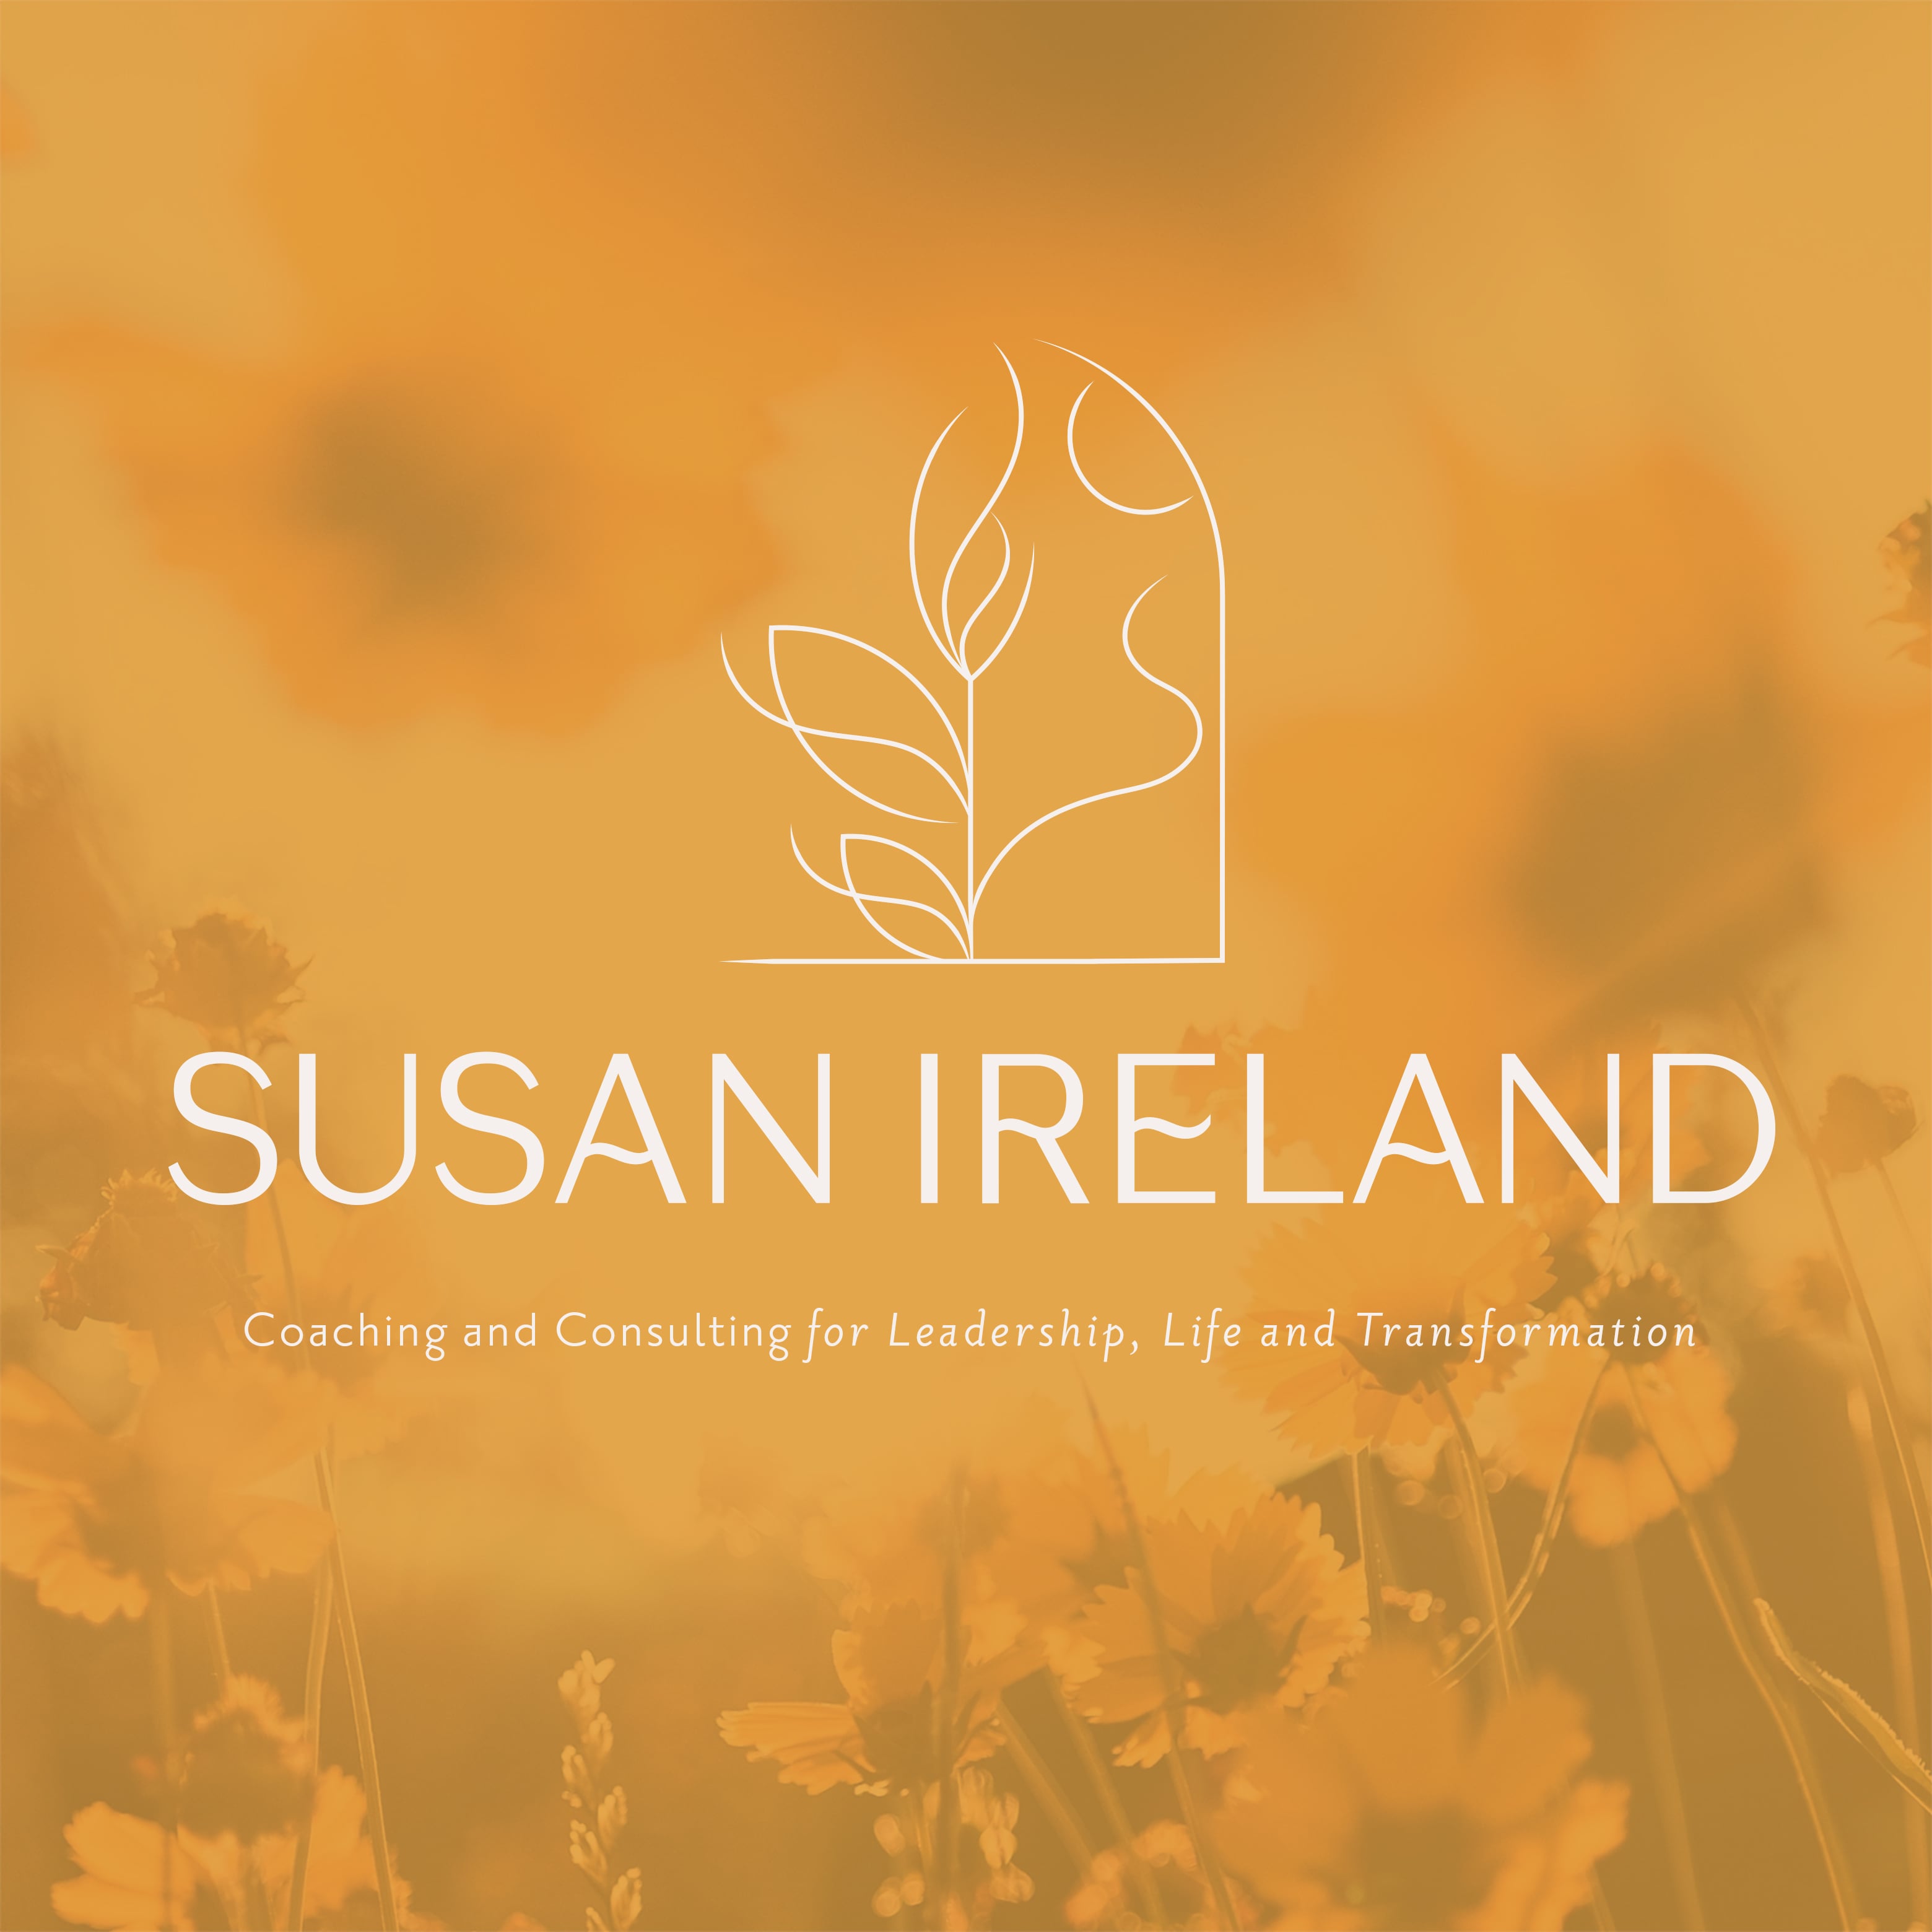 Susan Ireland